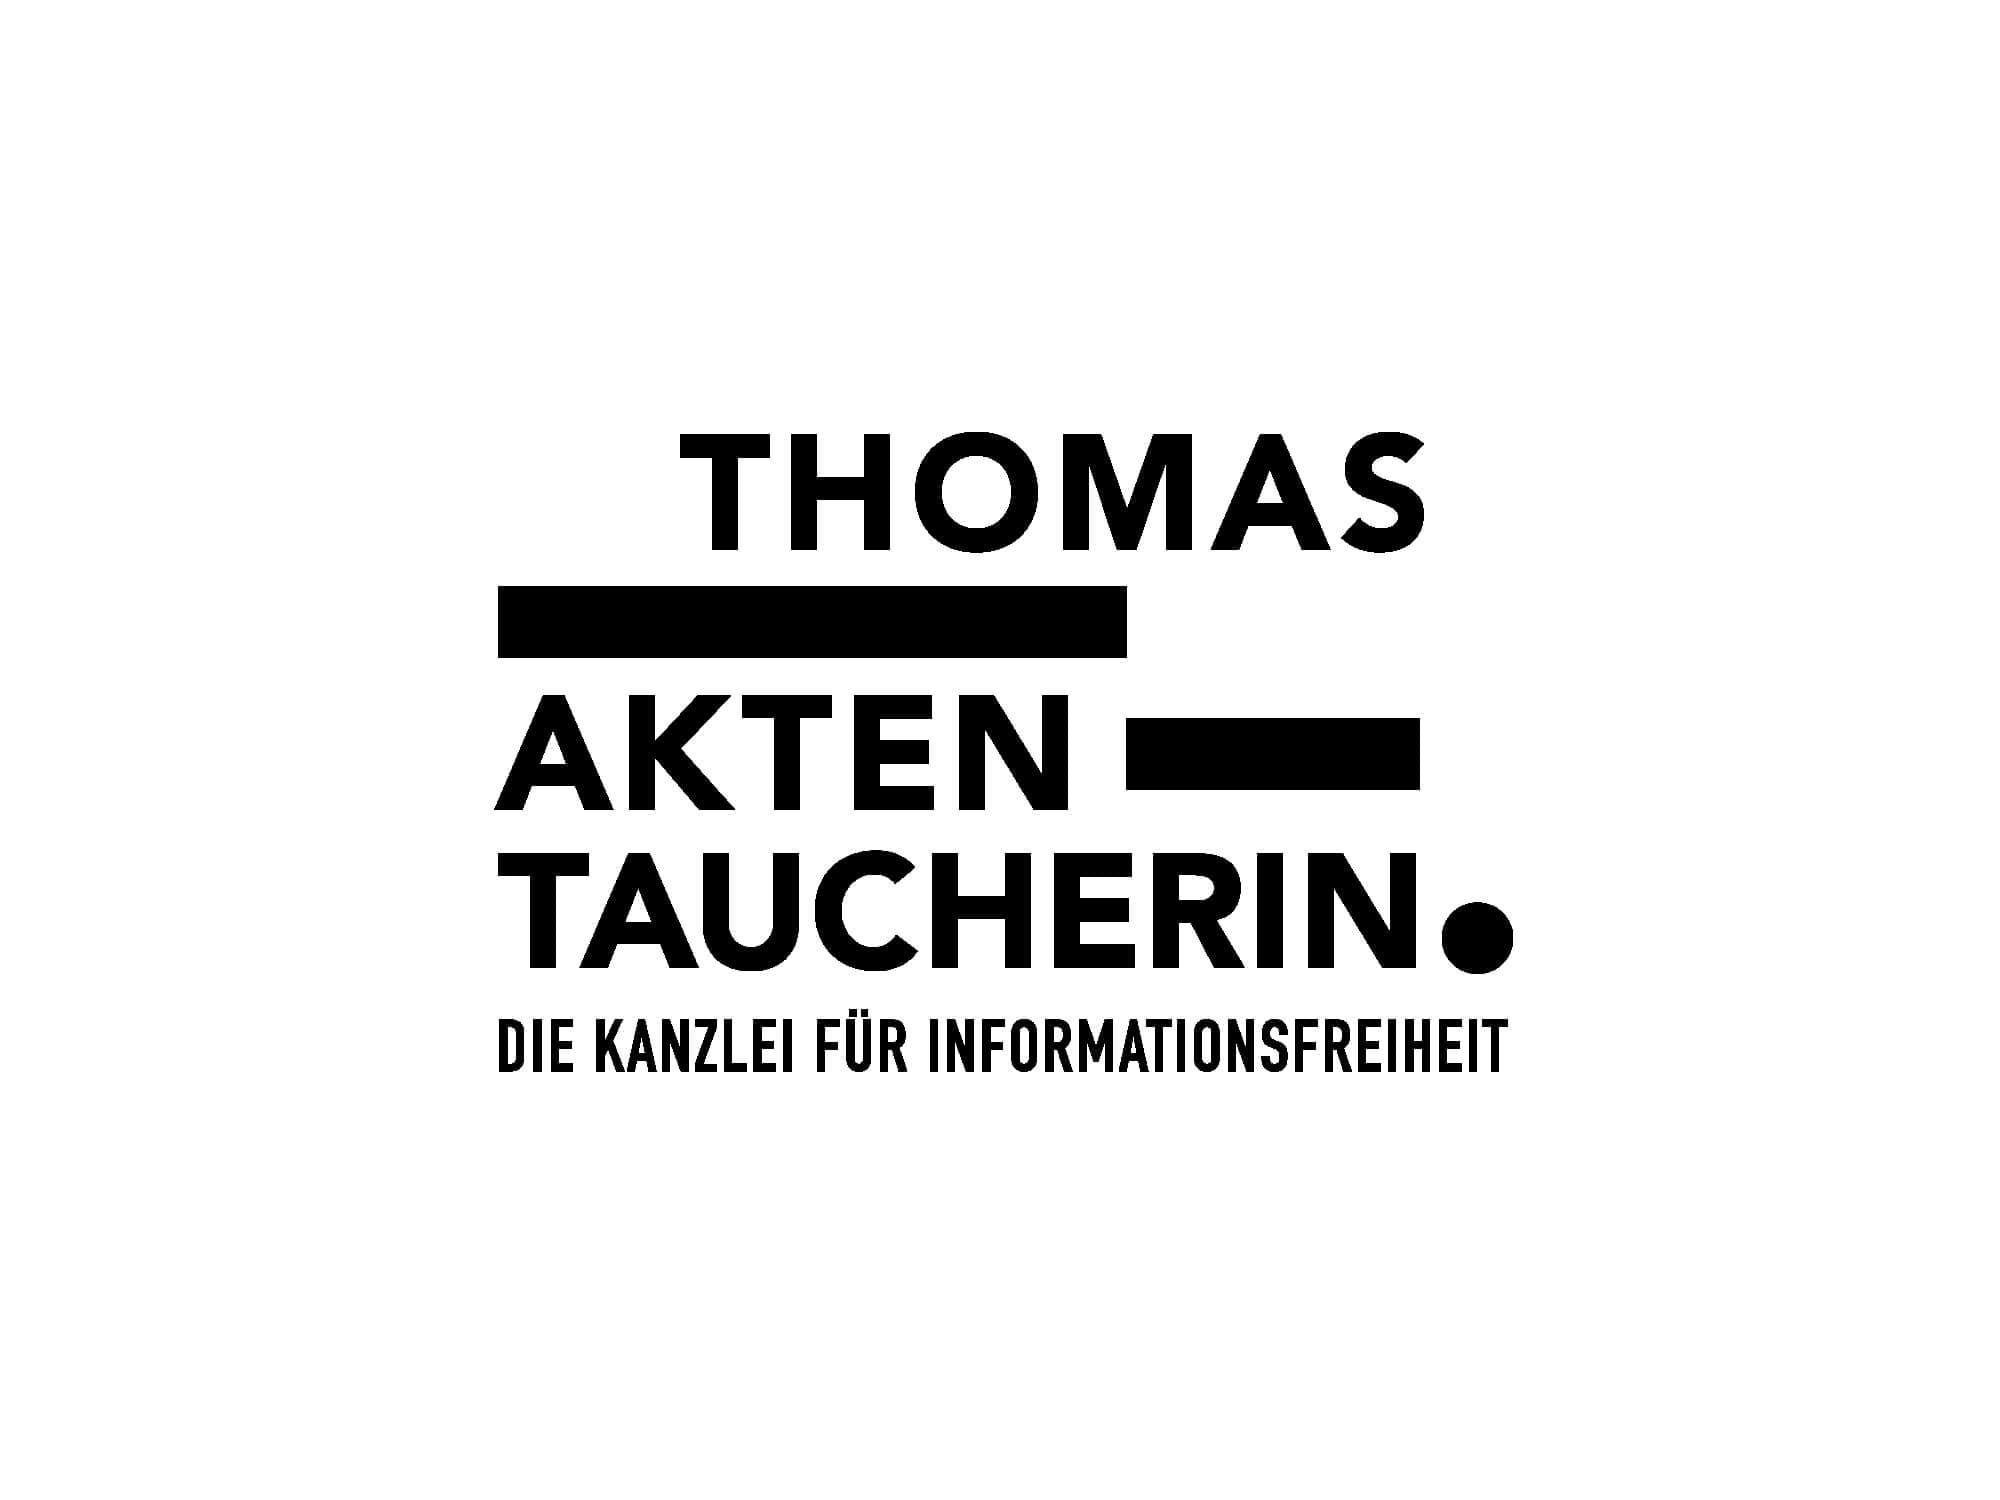 Thomas aktentaucherin extension du logotype de Thomas the startup lawyers. du Ichetkar inspiration Bauhaus